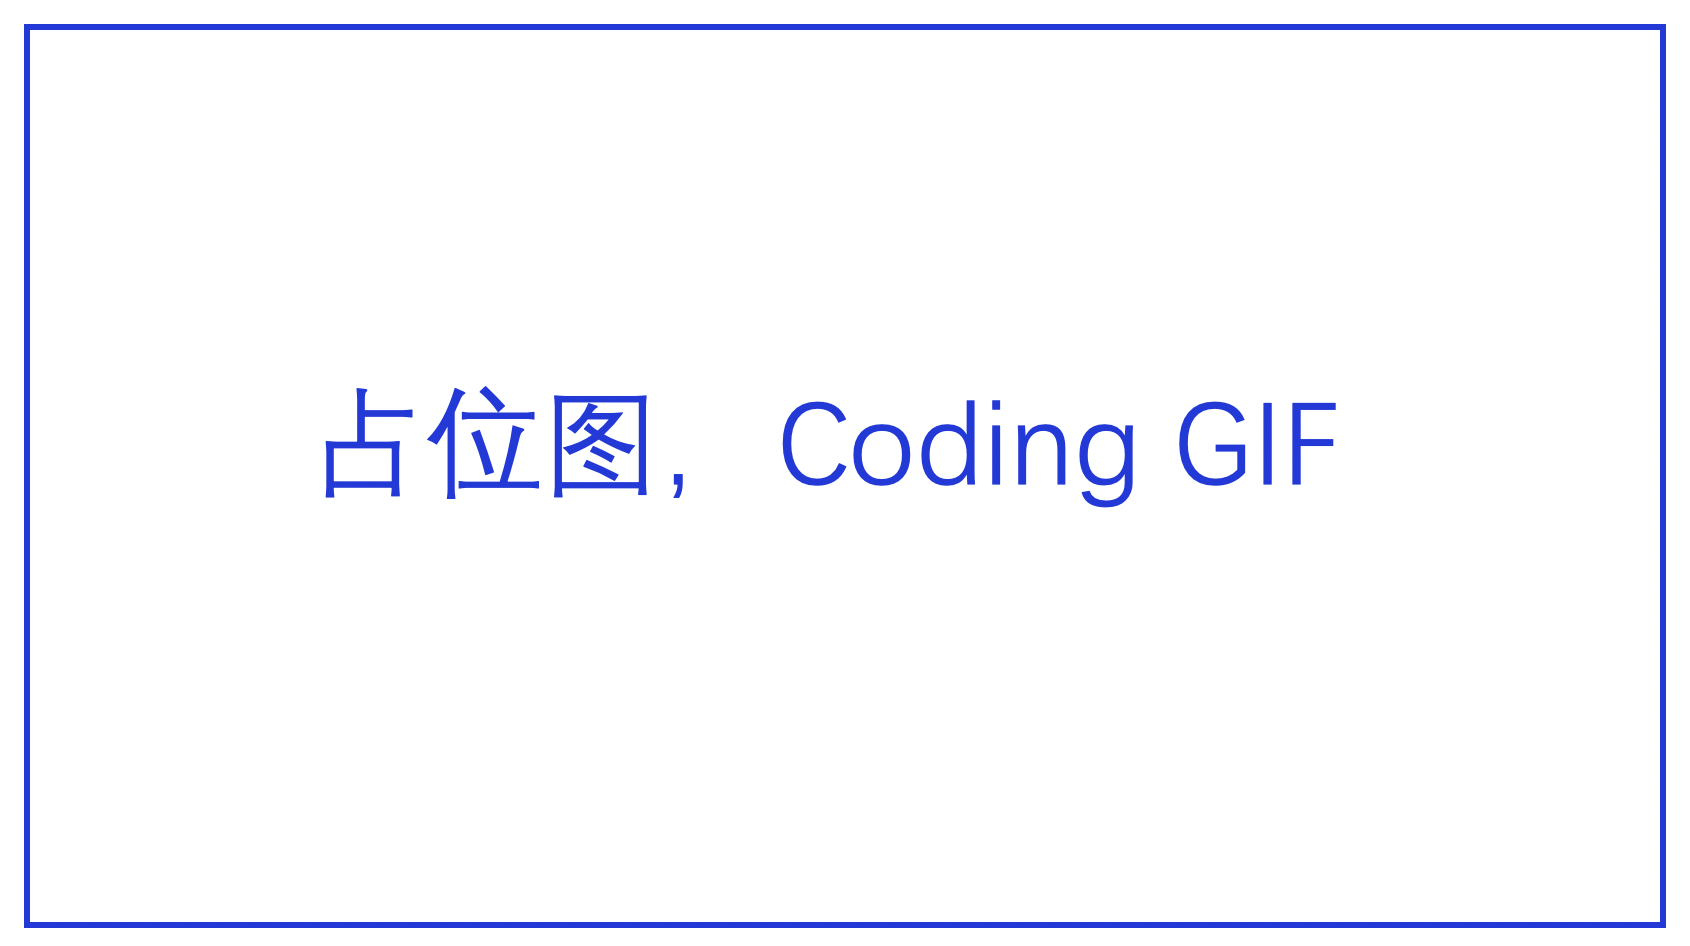 doc/imgs/coding-gif.png